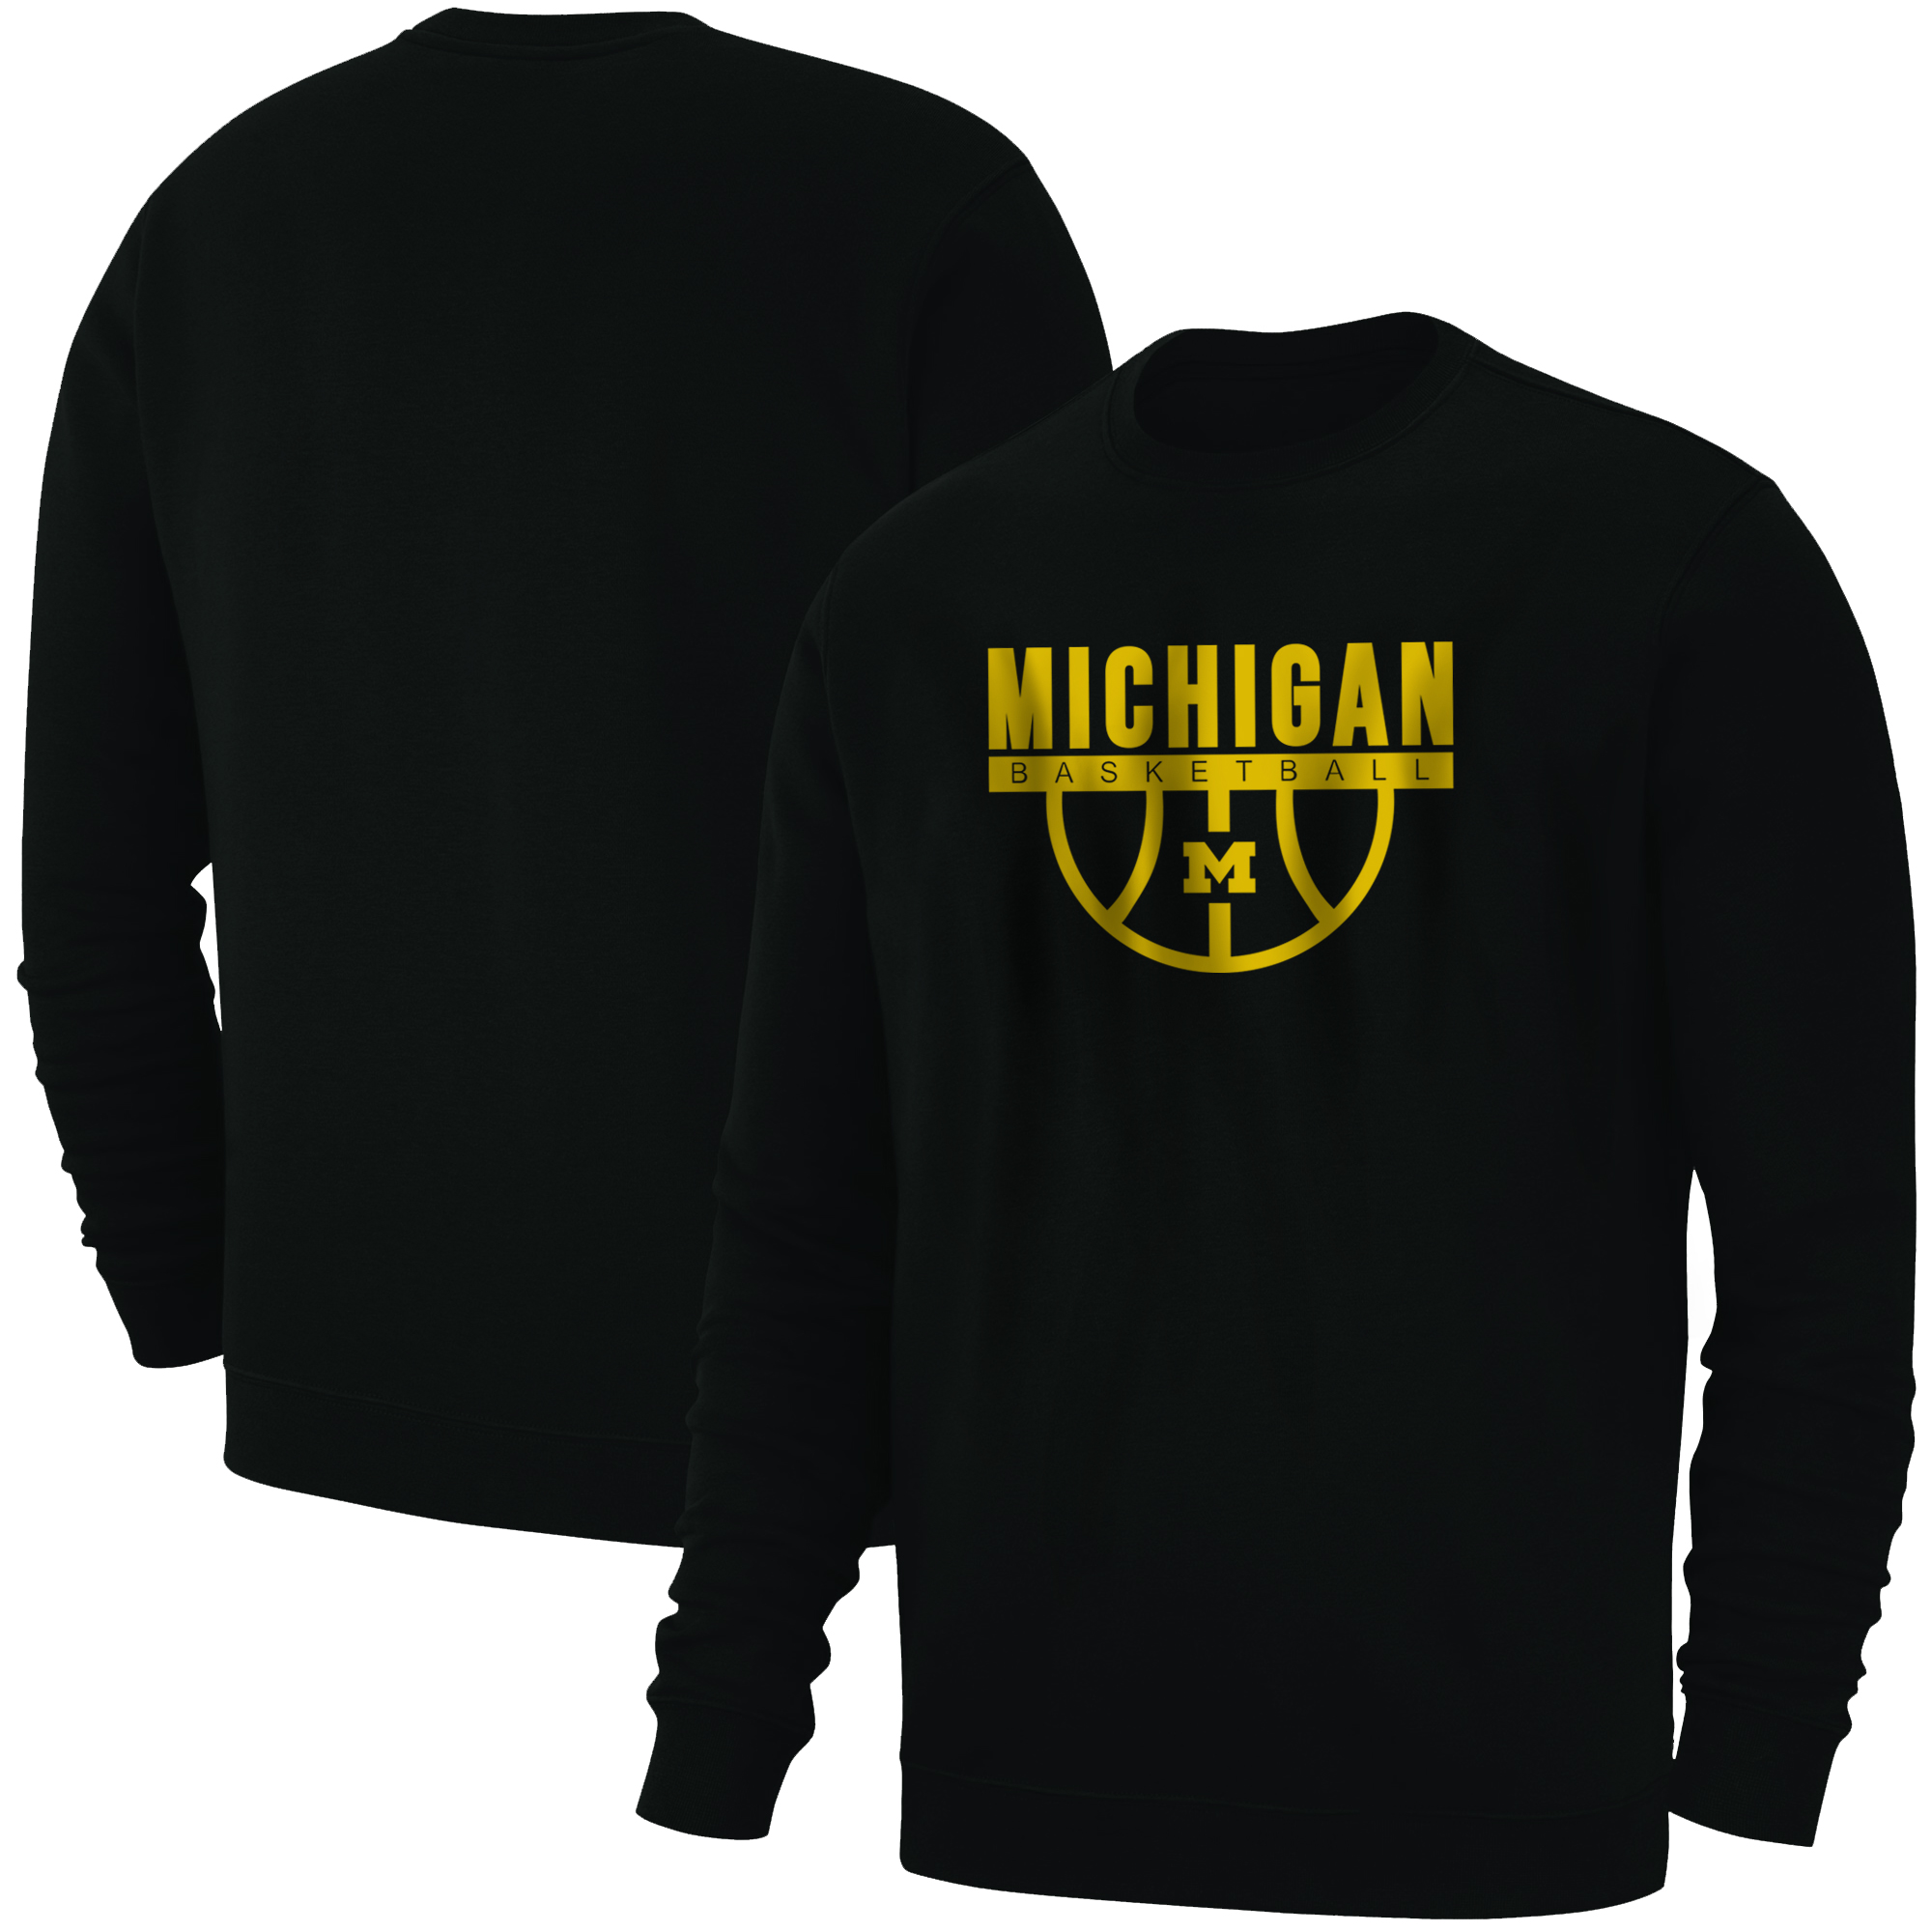 Michigan Wolverines Basic (BSC-BLC-6013-Michigan)